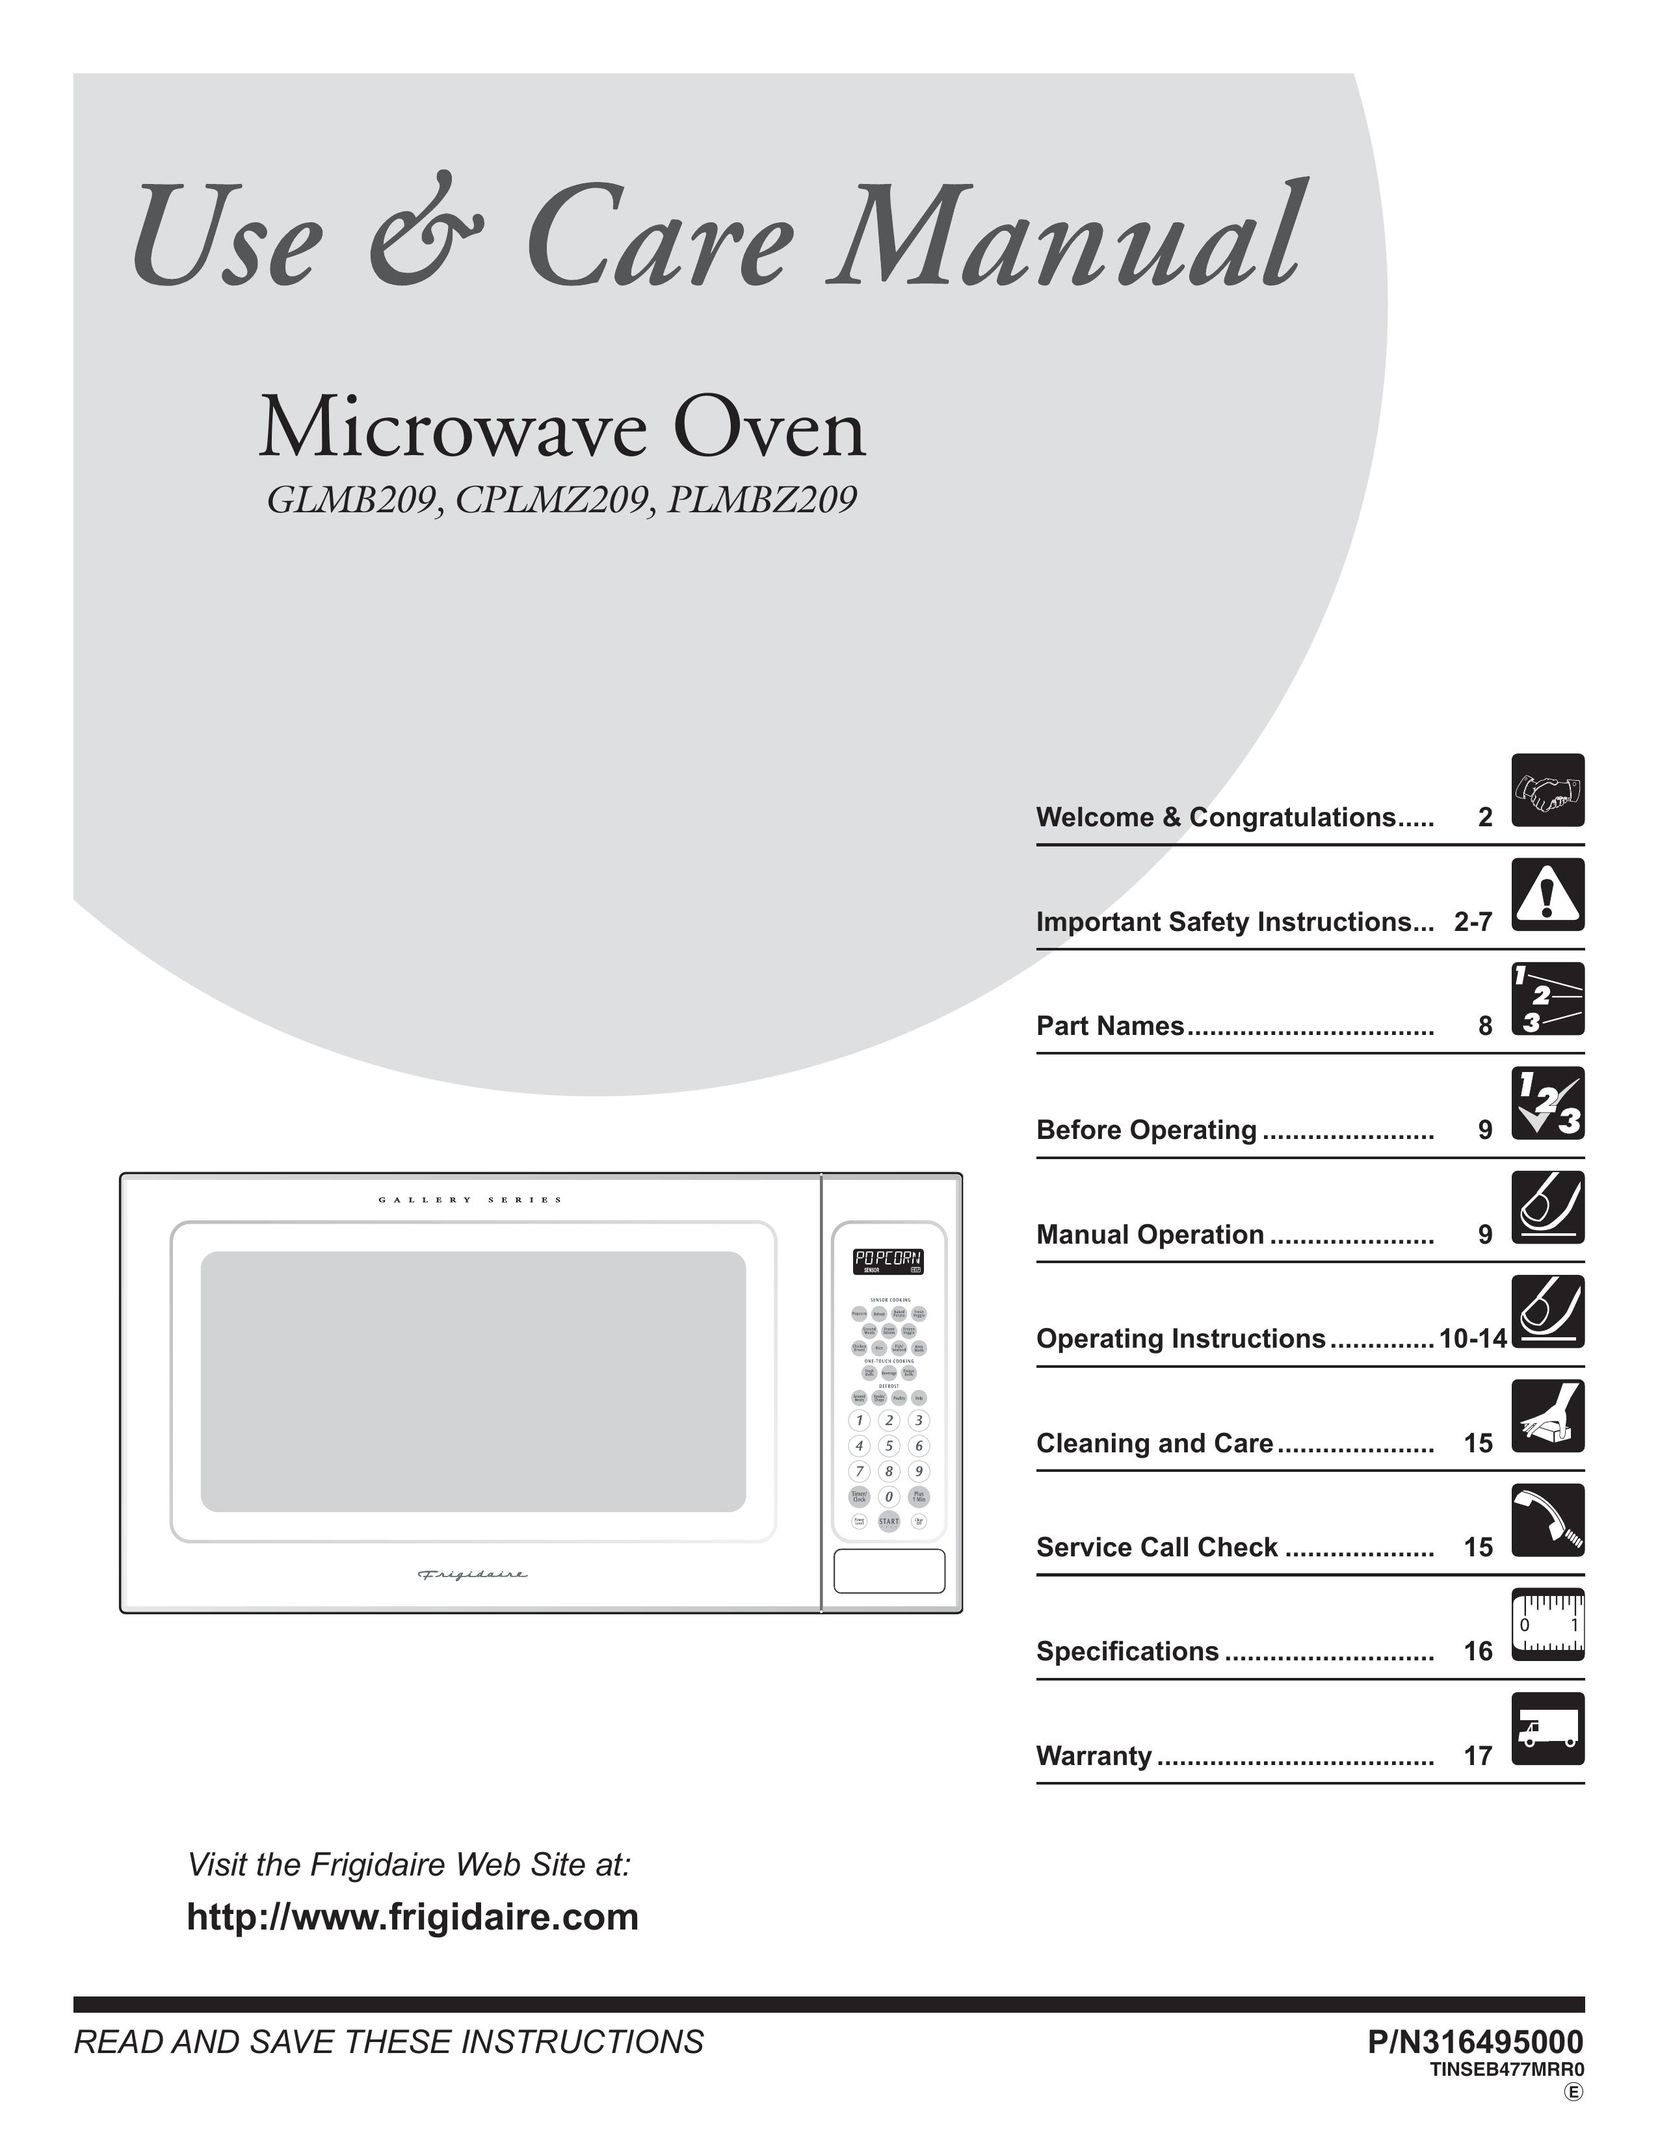 Frigidaire CPLMZ209 Microwave Oven User Manual